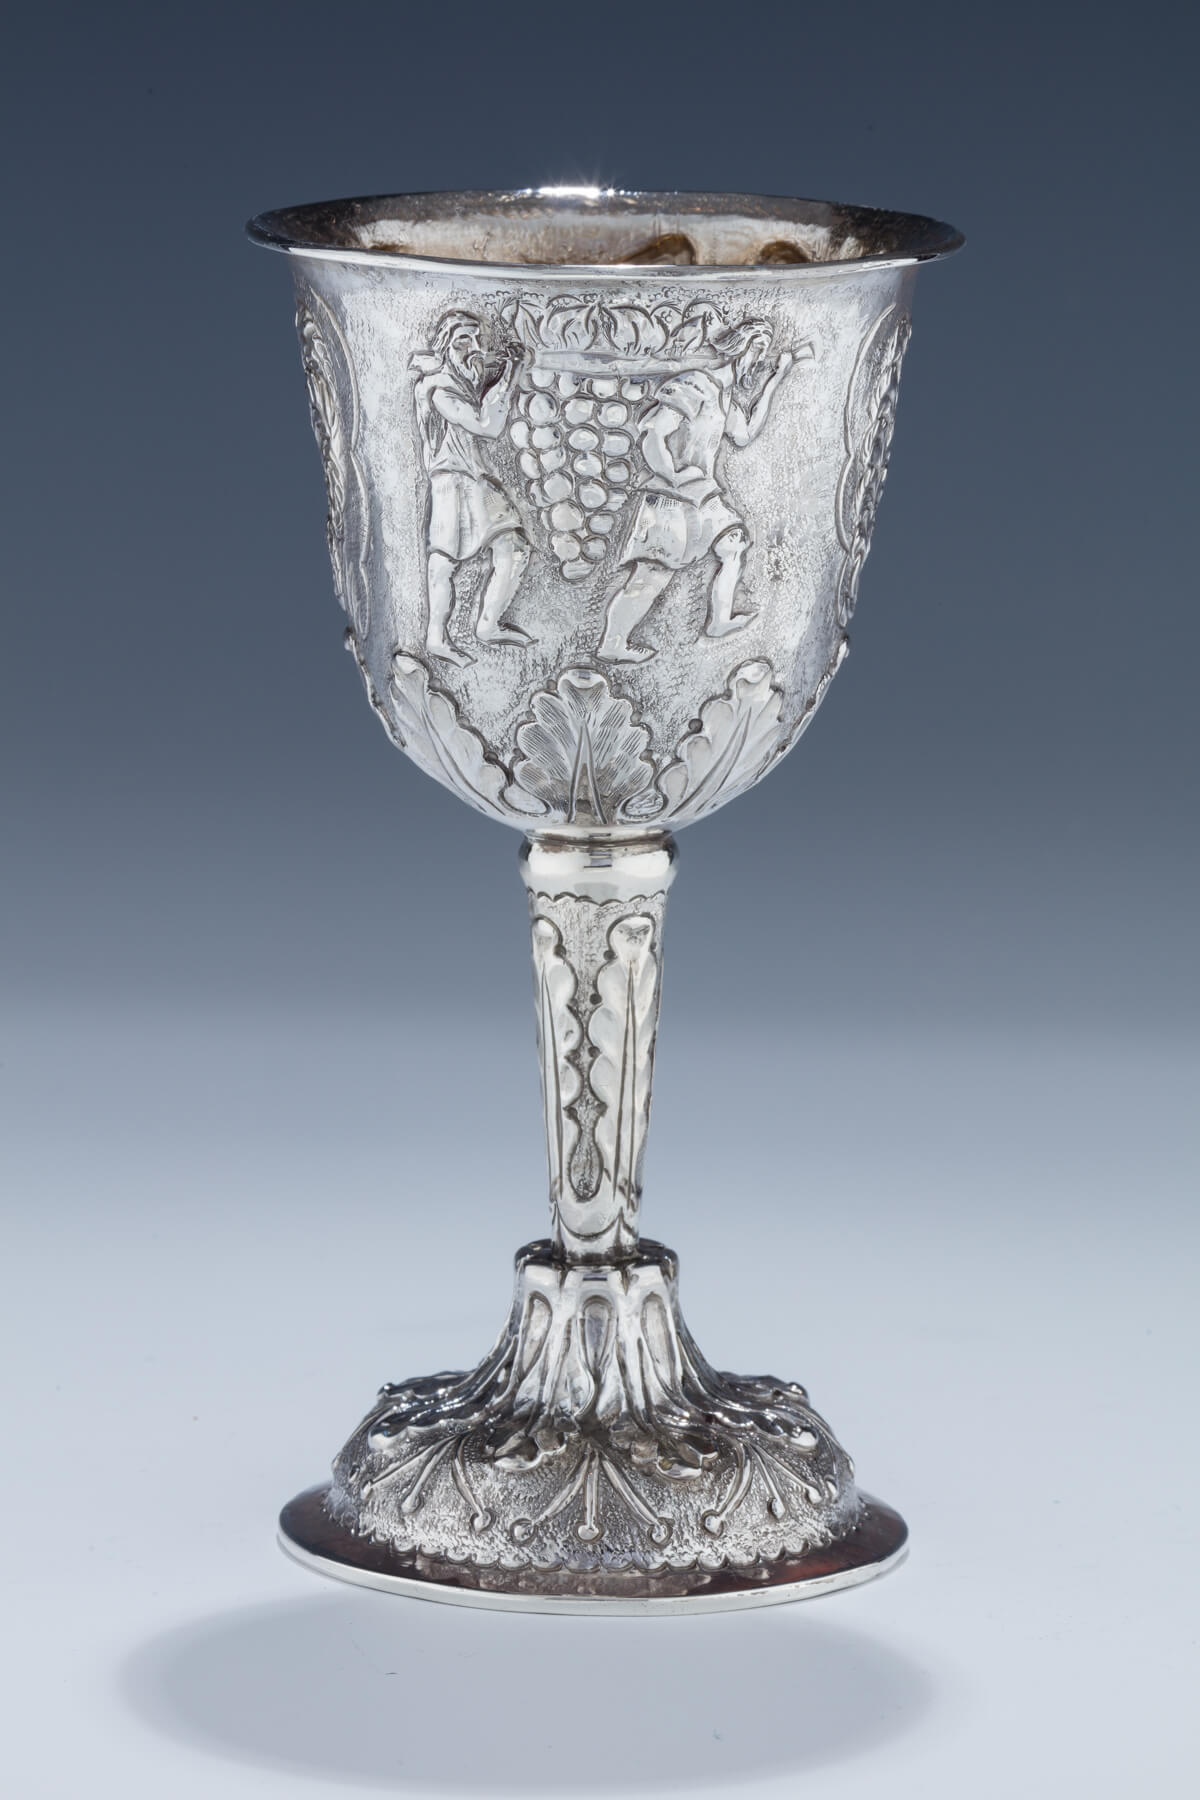 166. A Monumental Silver Goblet